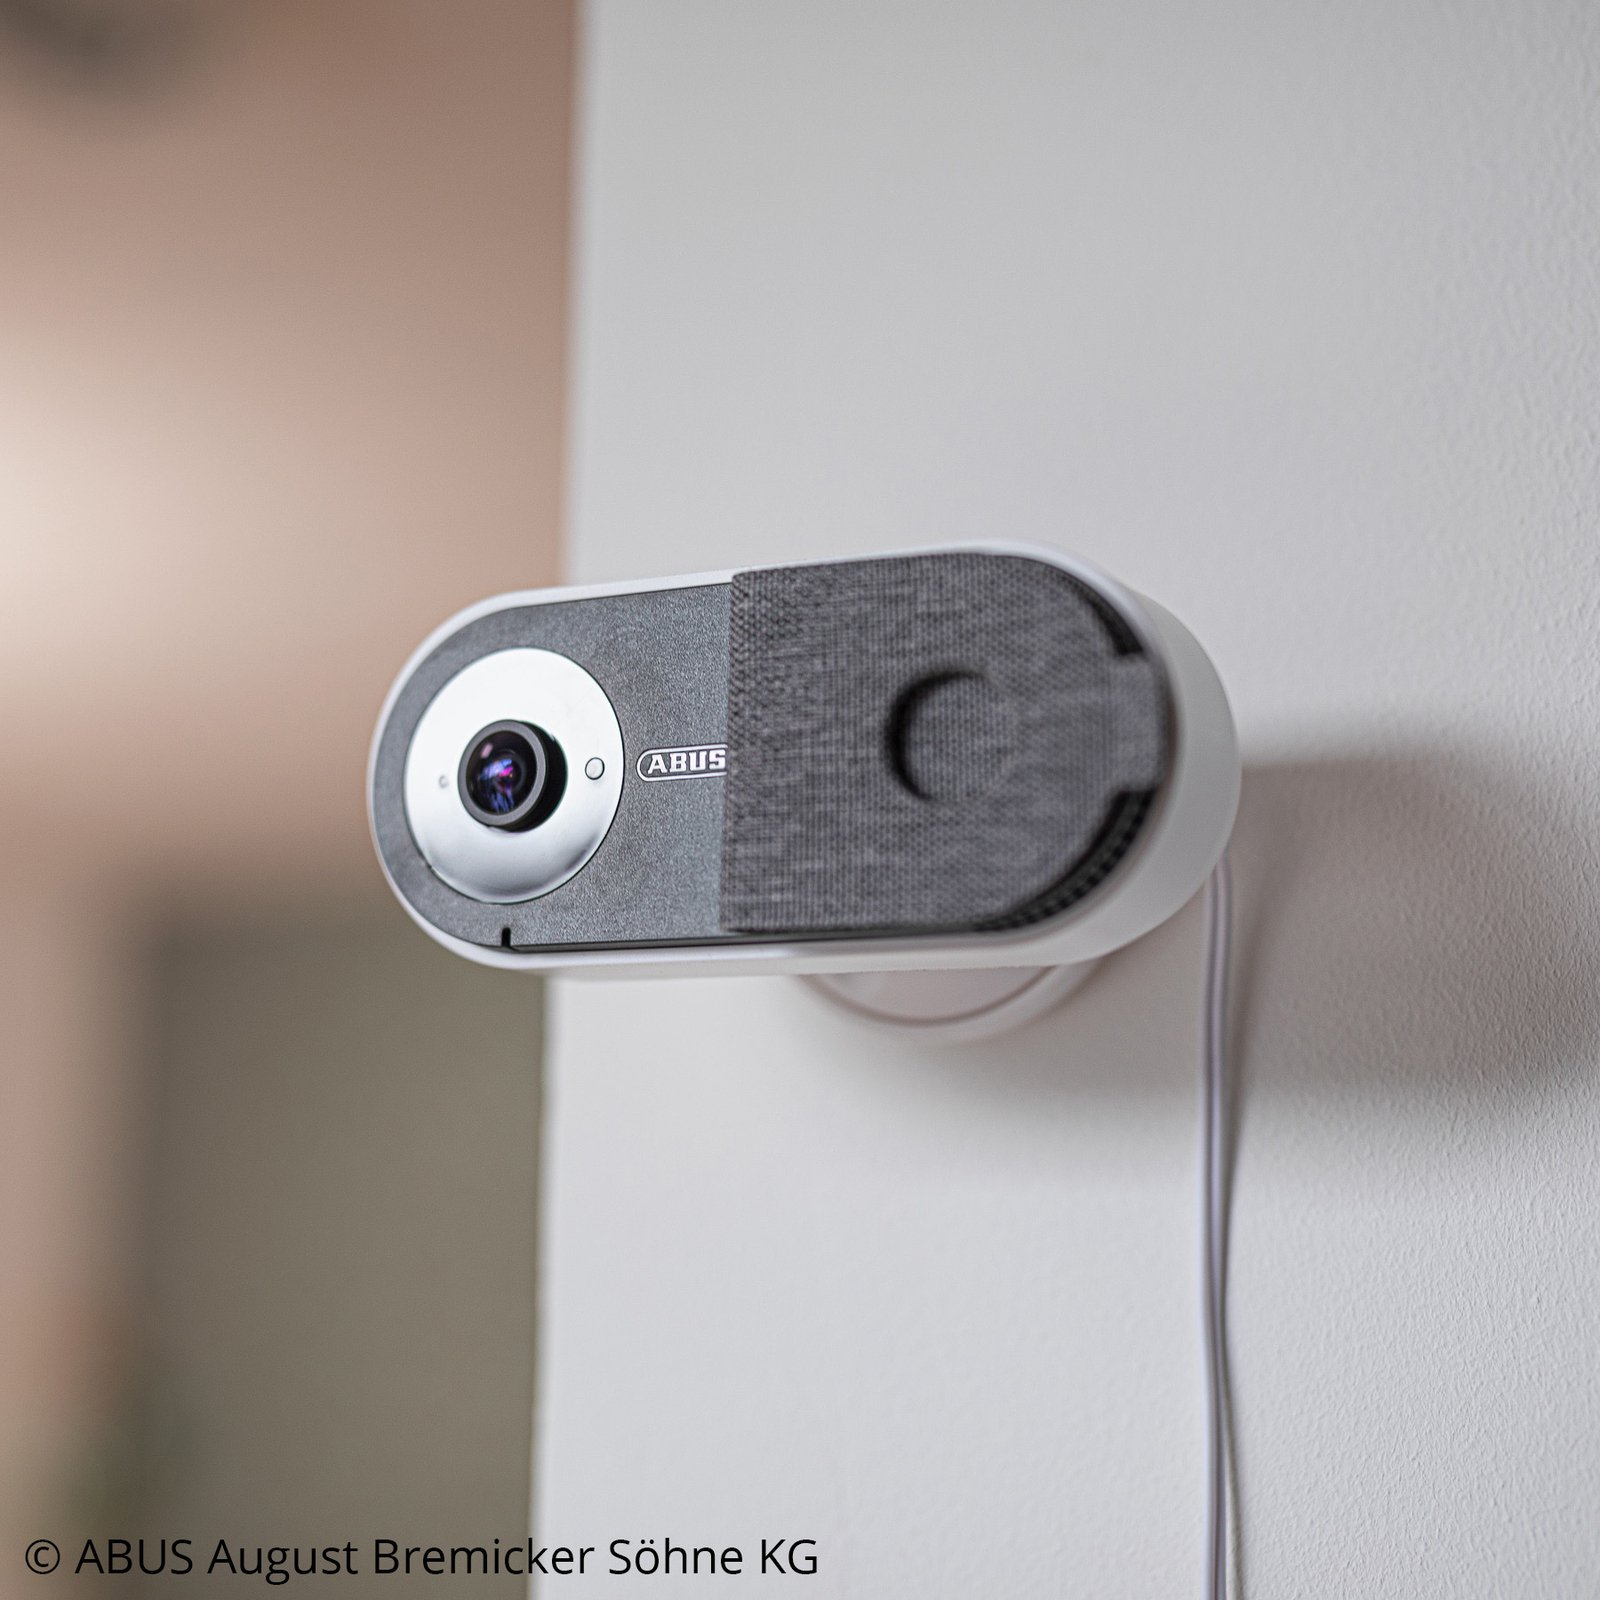 ABUS Privacy WiFi camera, full HD, 2-way audio